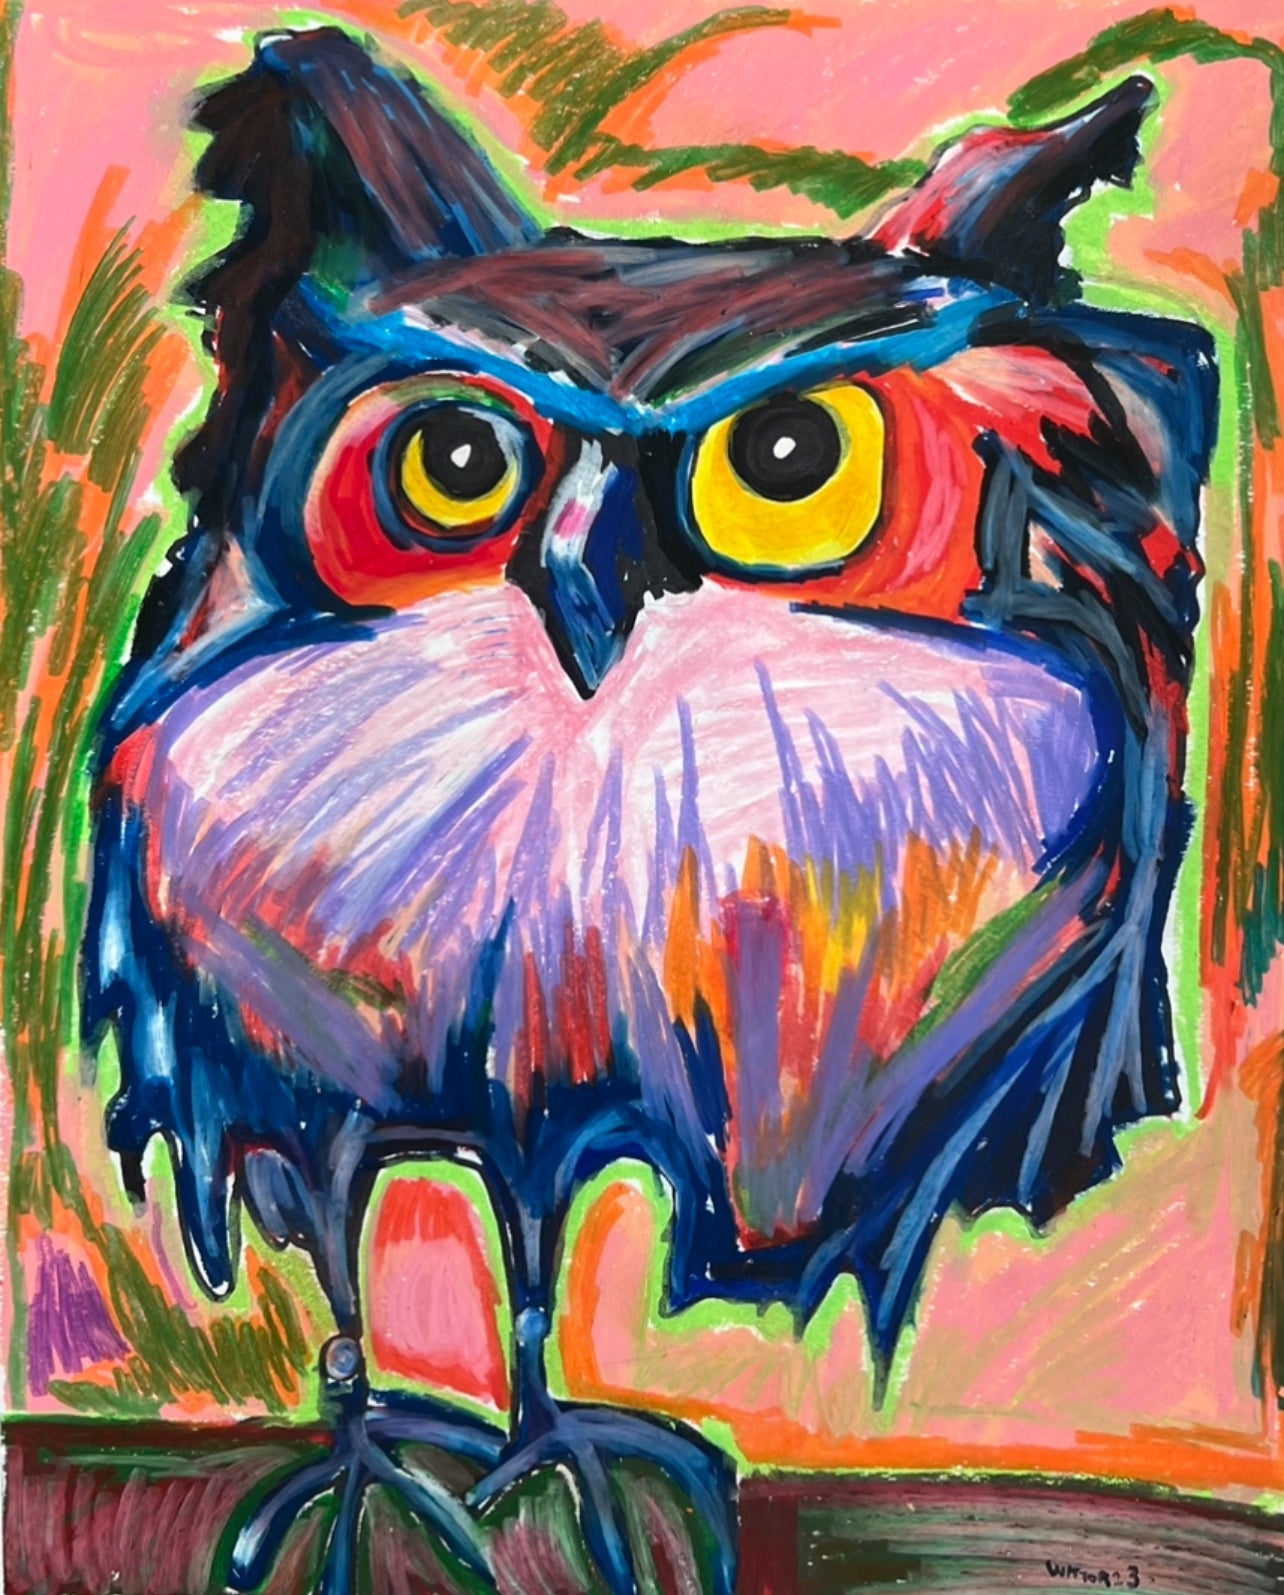 Colorful Owl - fine prints of original artwork